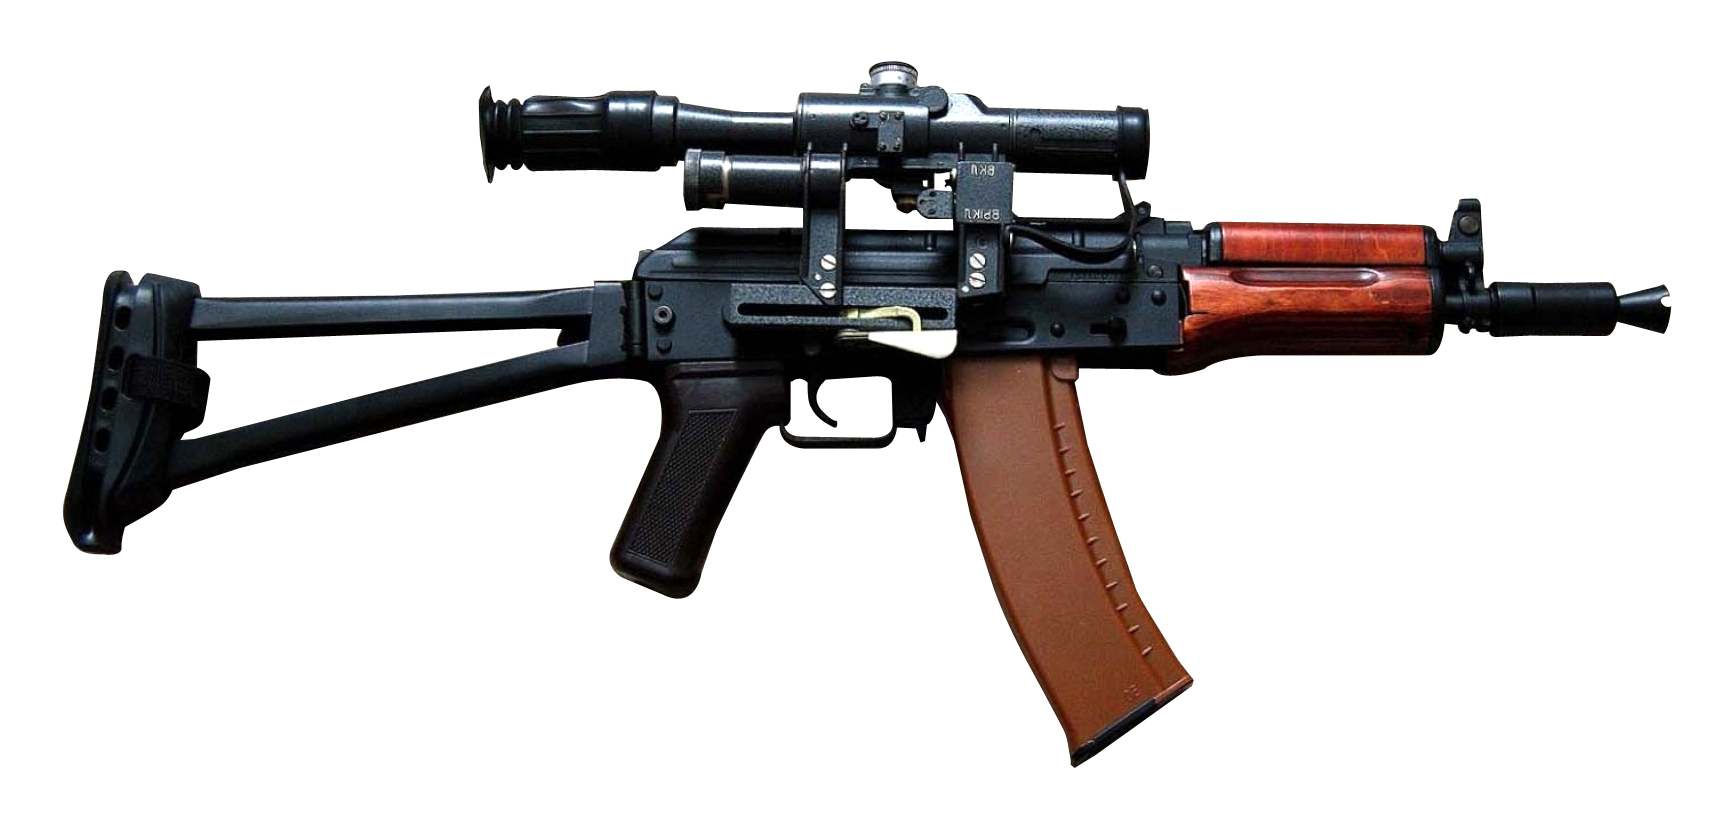 Assault Rifle Gun Png Transparent Image - Gun, Transparent background PNG HD thumbnail